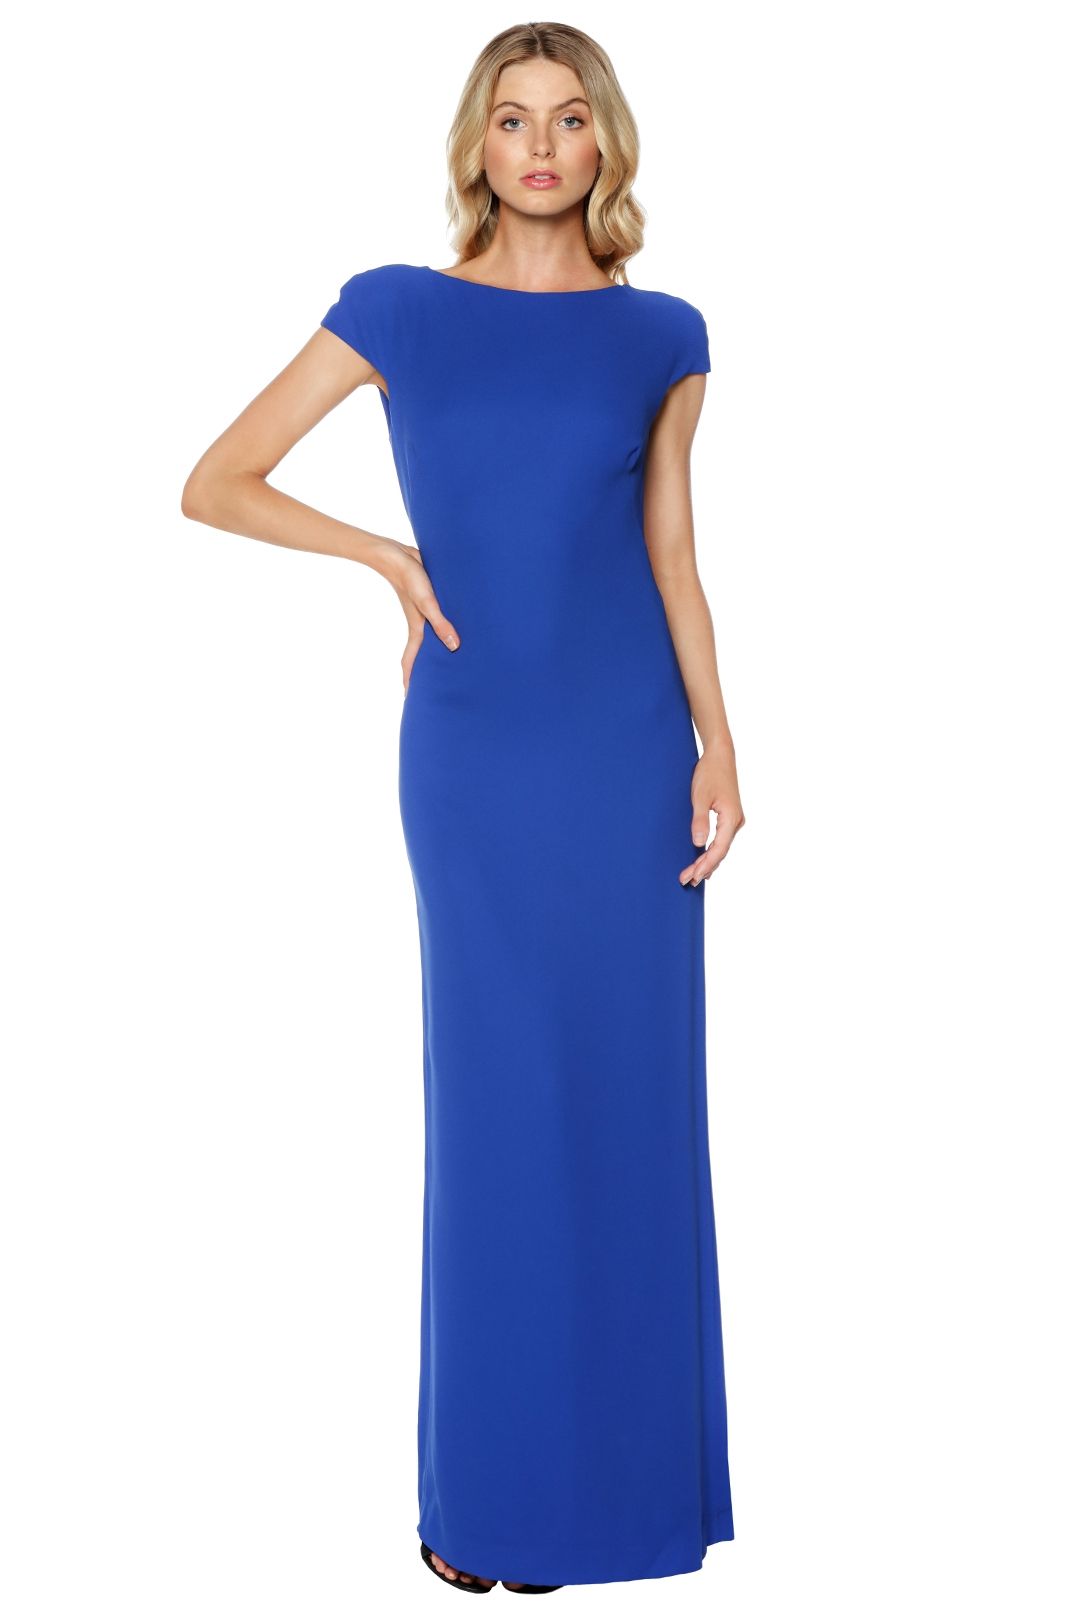 Carla Zampatti - Royal Diamond Cut Out Maxi Dress - Blue - Front